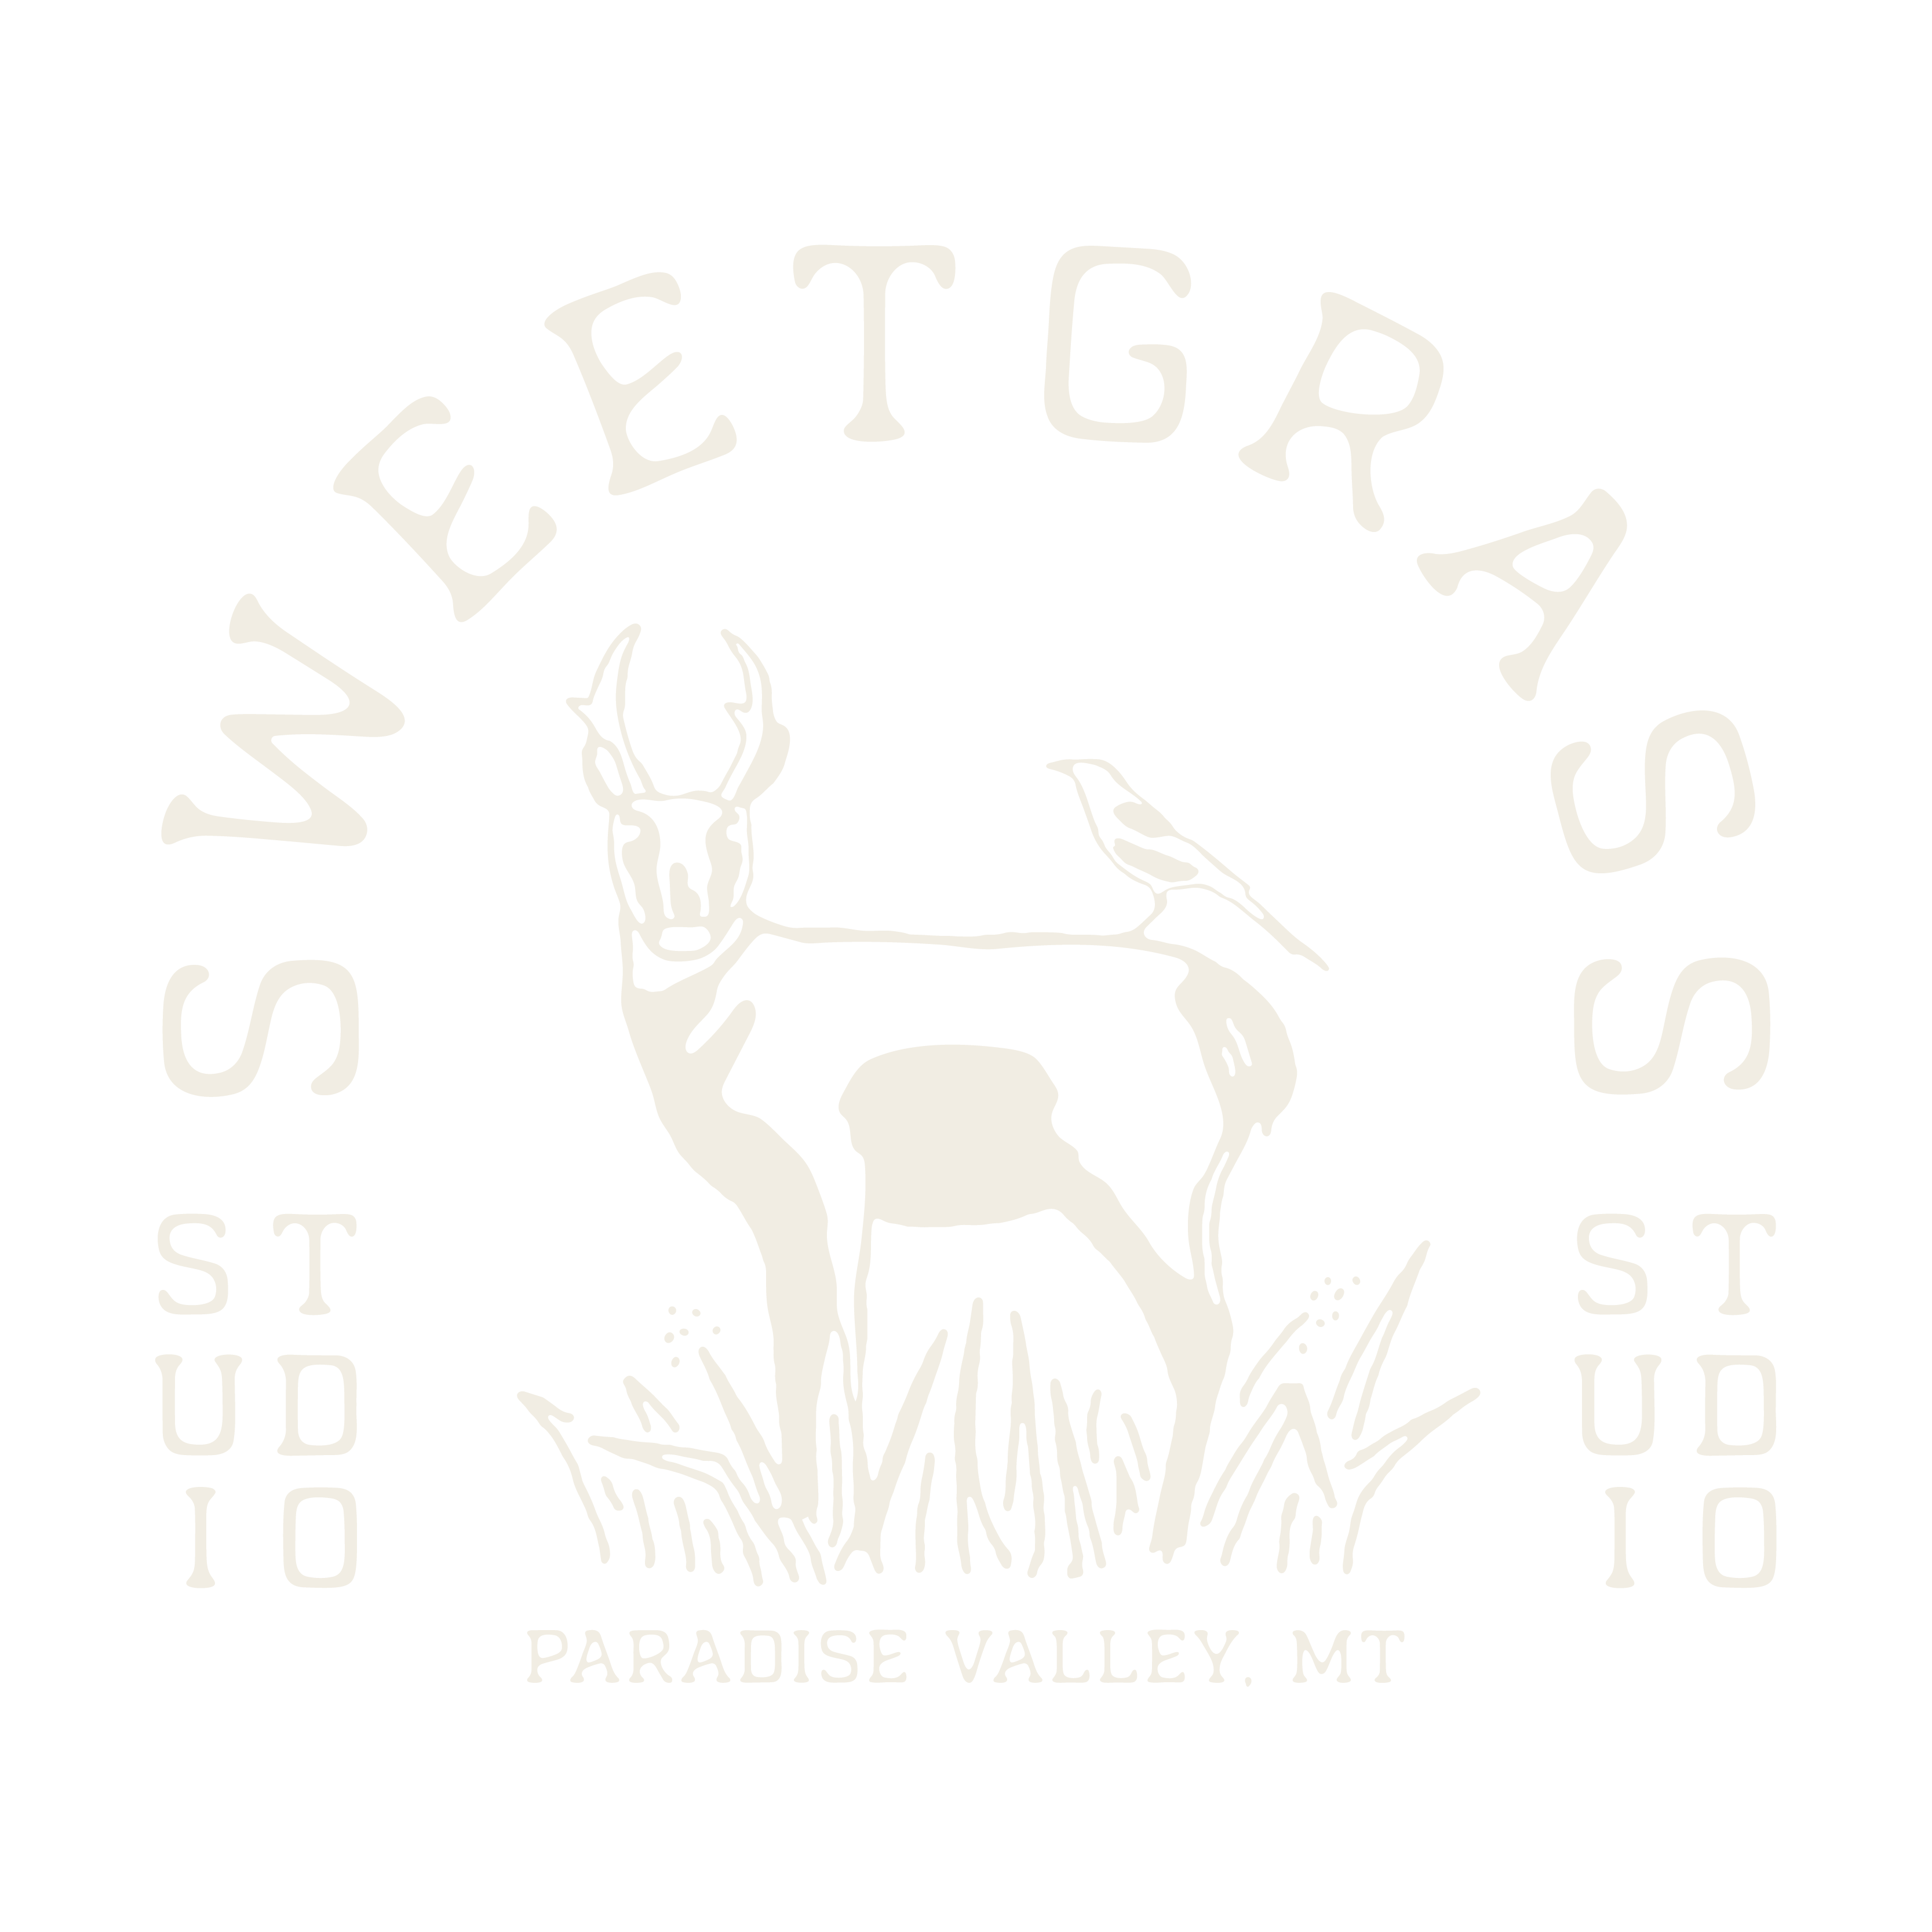 Sweetgrass Studio